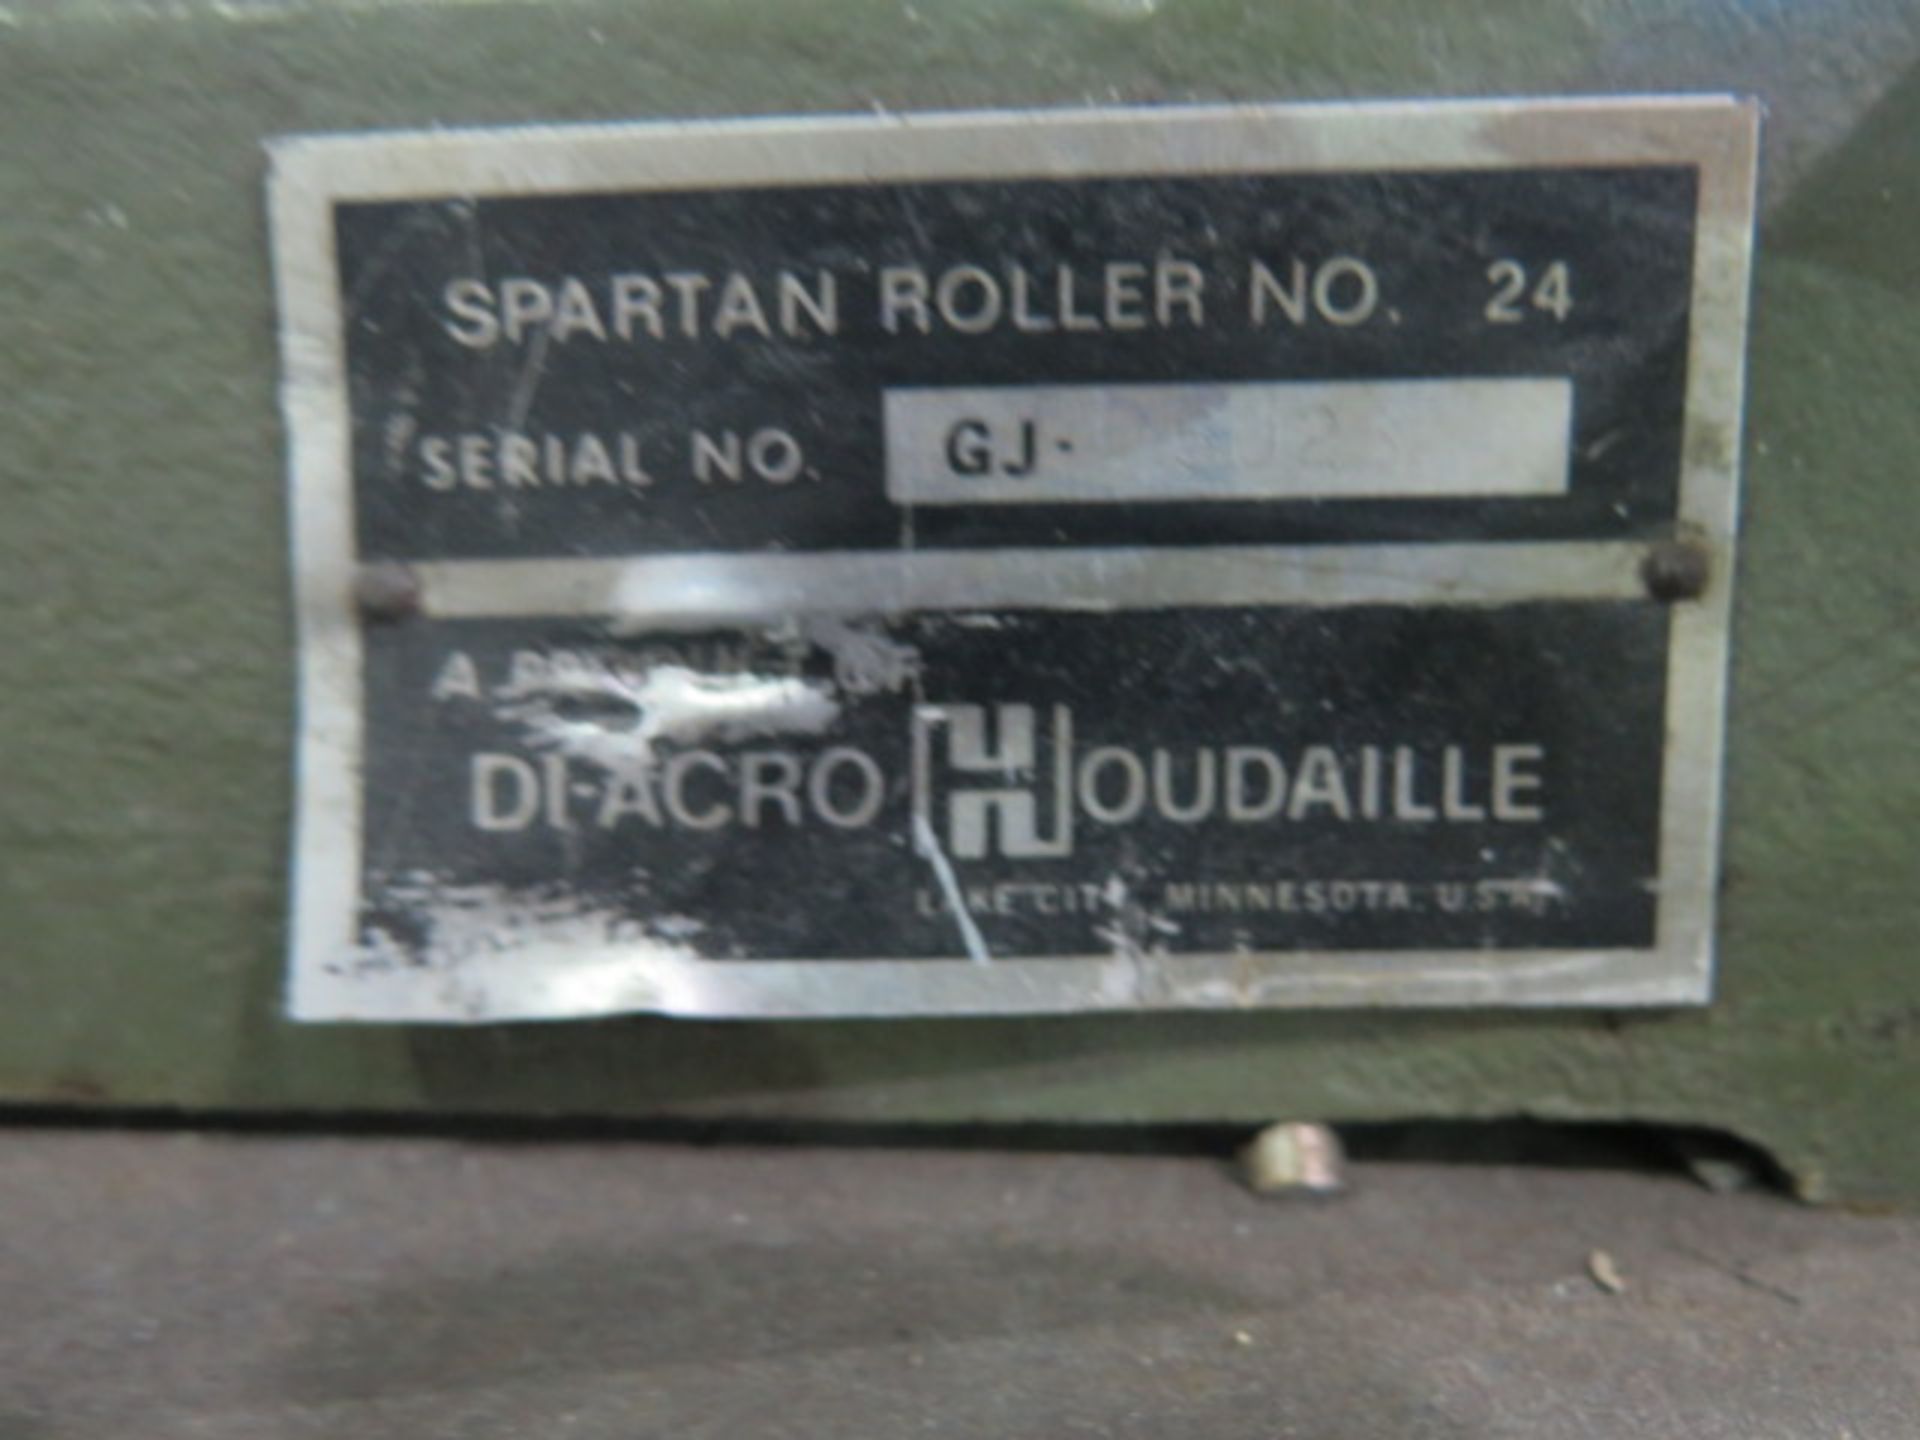 DiAcro Spartan Roller No.245 24” Hand Roll s/n GT-5023 w/ 2” Rolls (SOLD AS-IS - NO WARRANTY) - Image 7 of 7